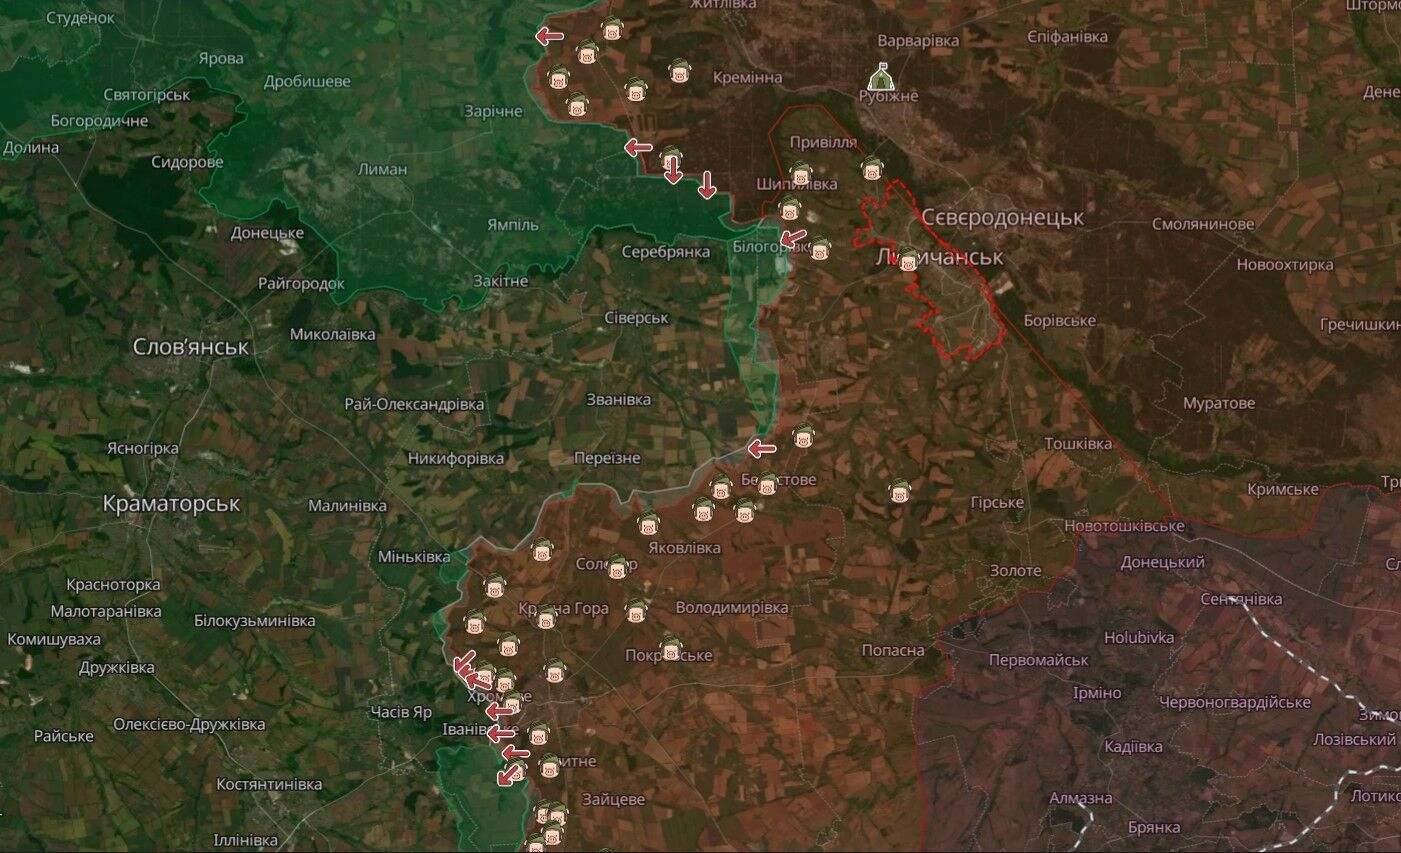 Lysychansk on the DeepState map of hostilities